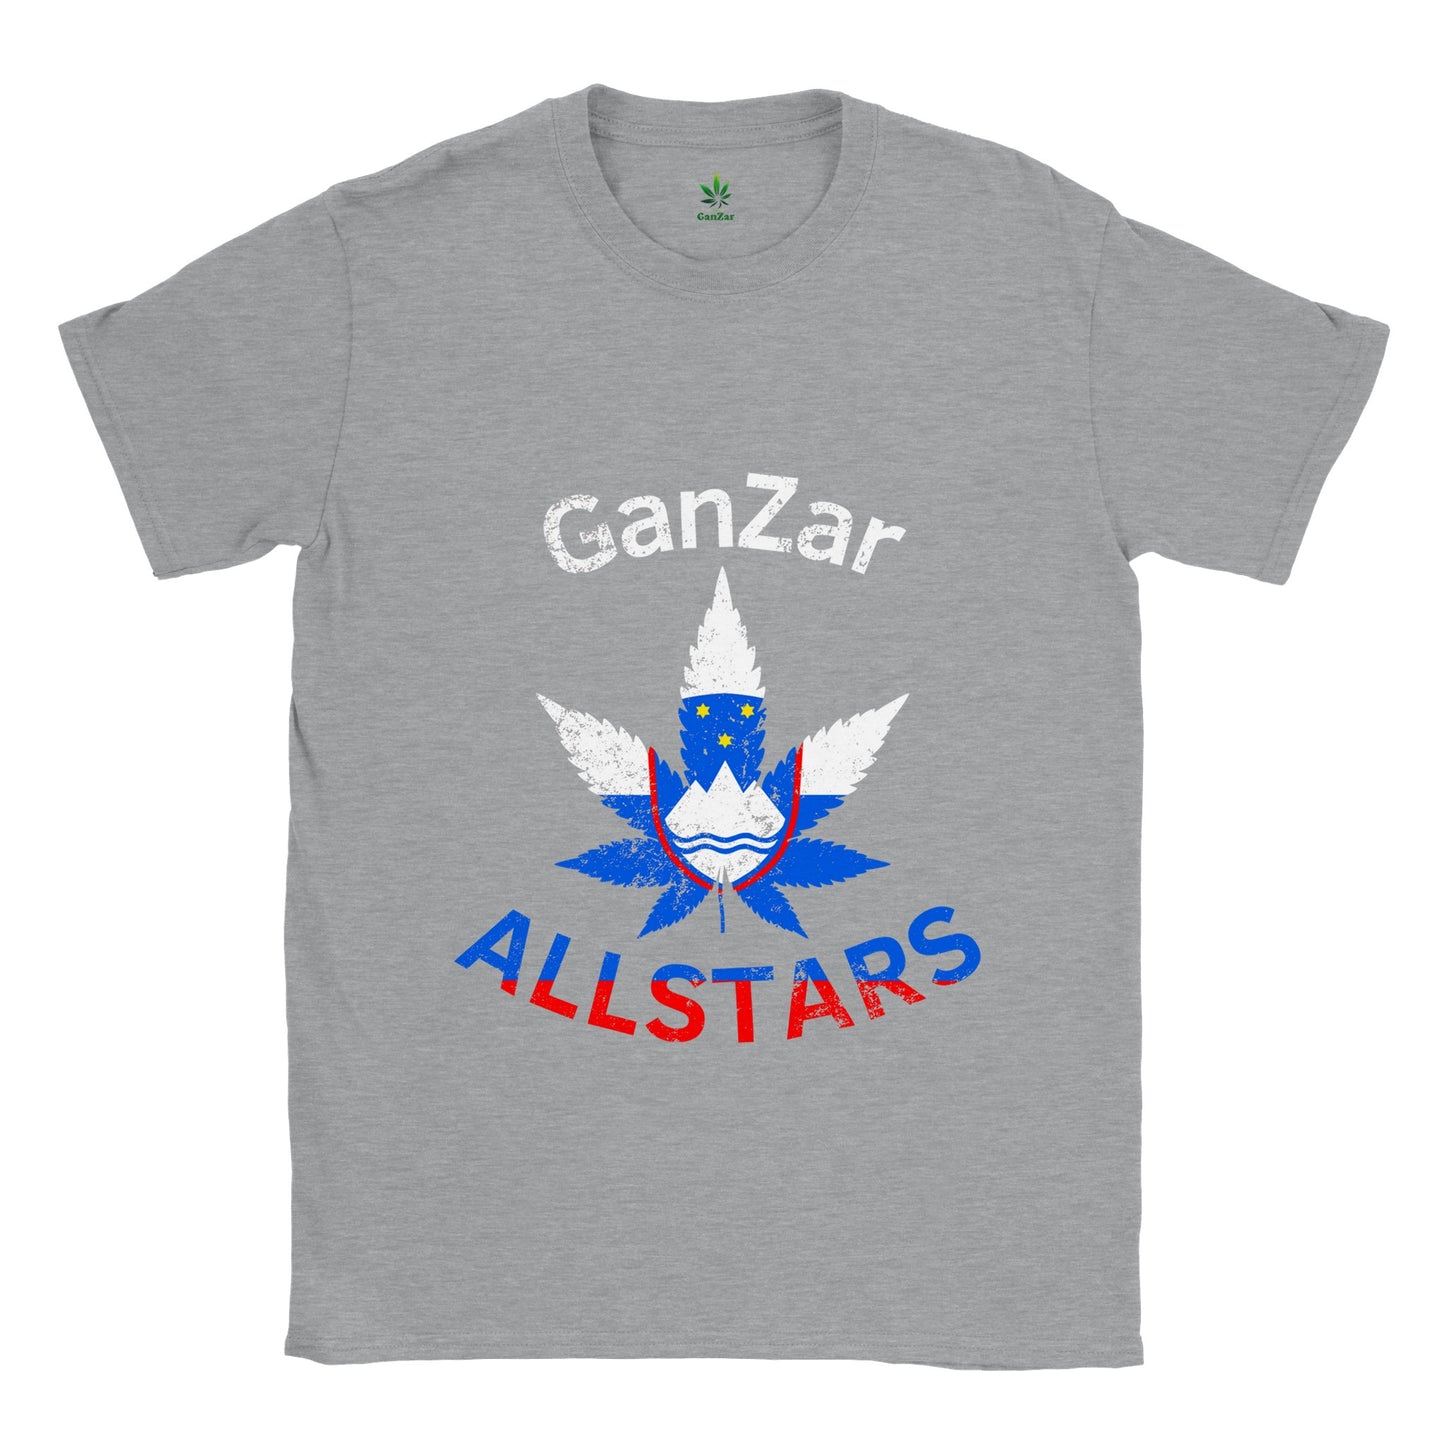 Slowenien GanZar Allstars Unisex T-Shirt